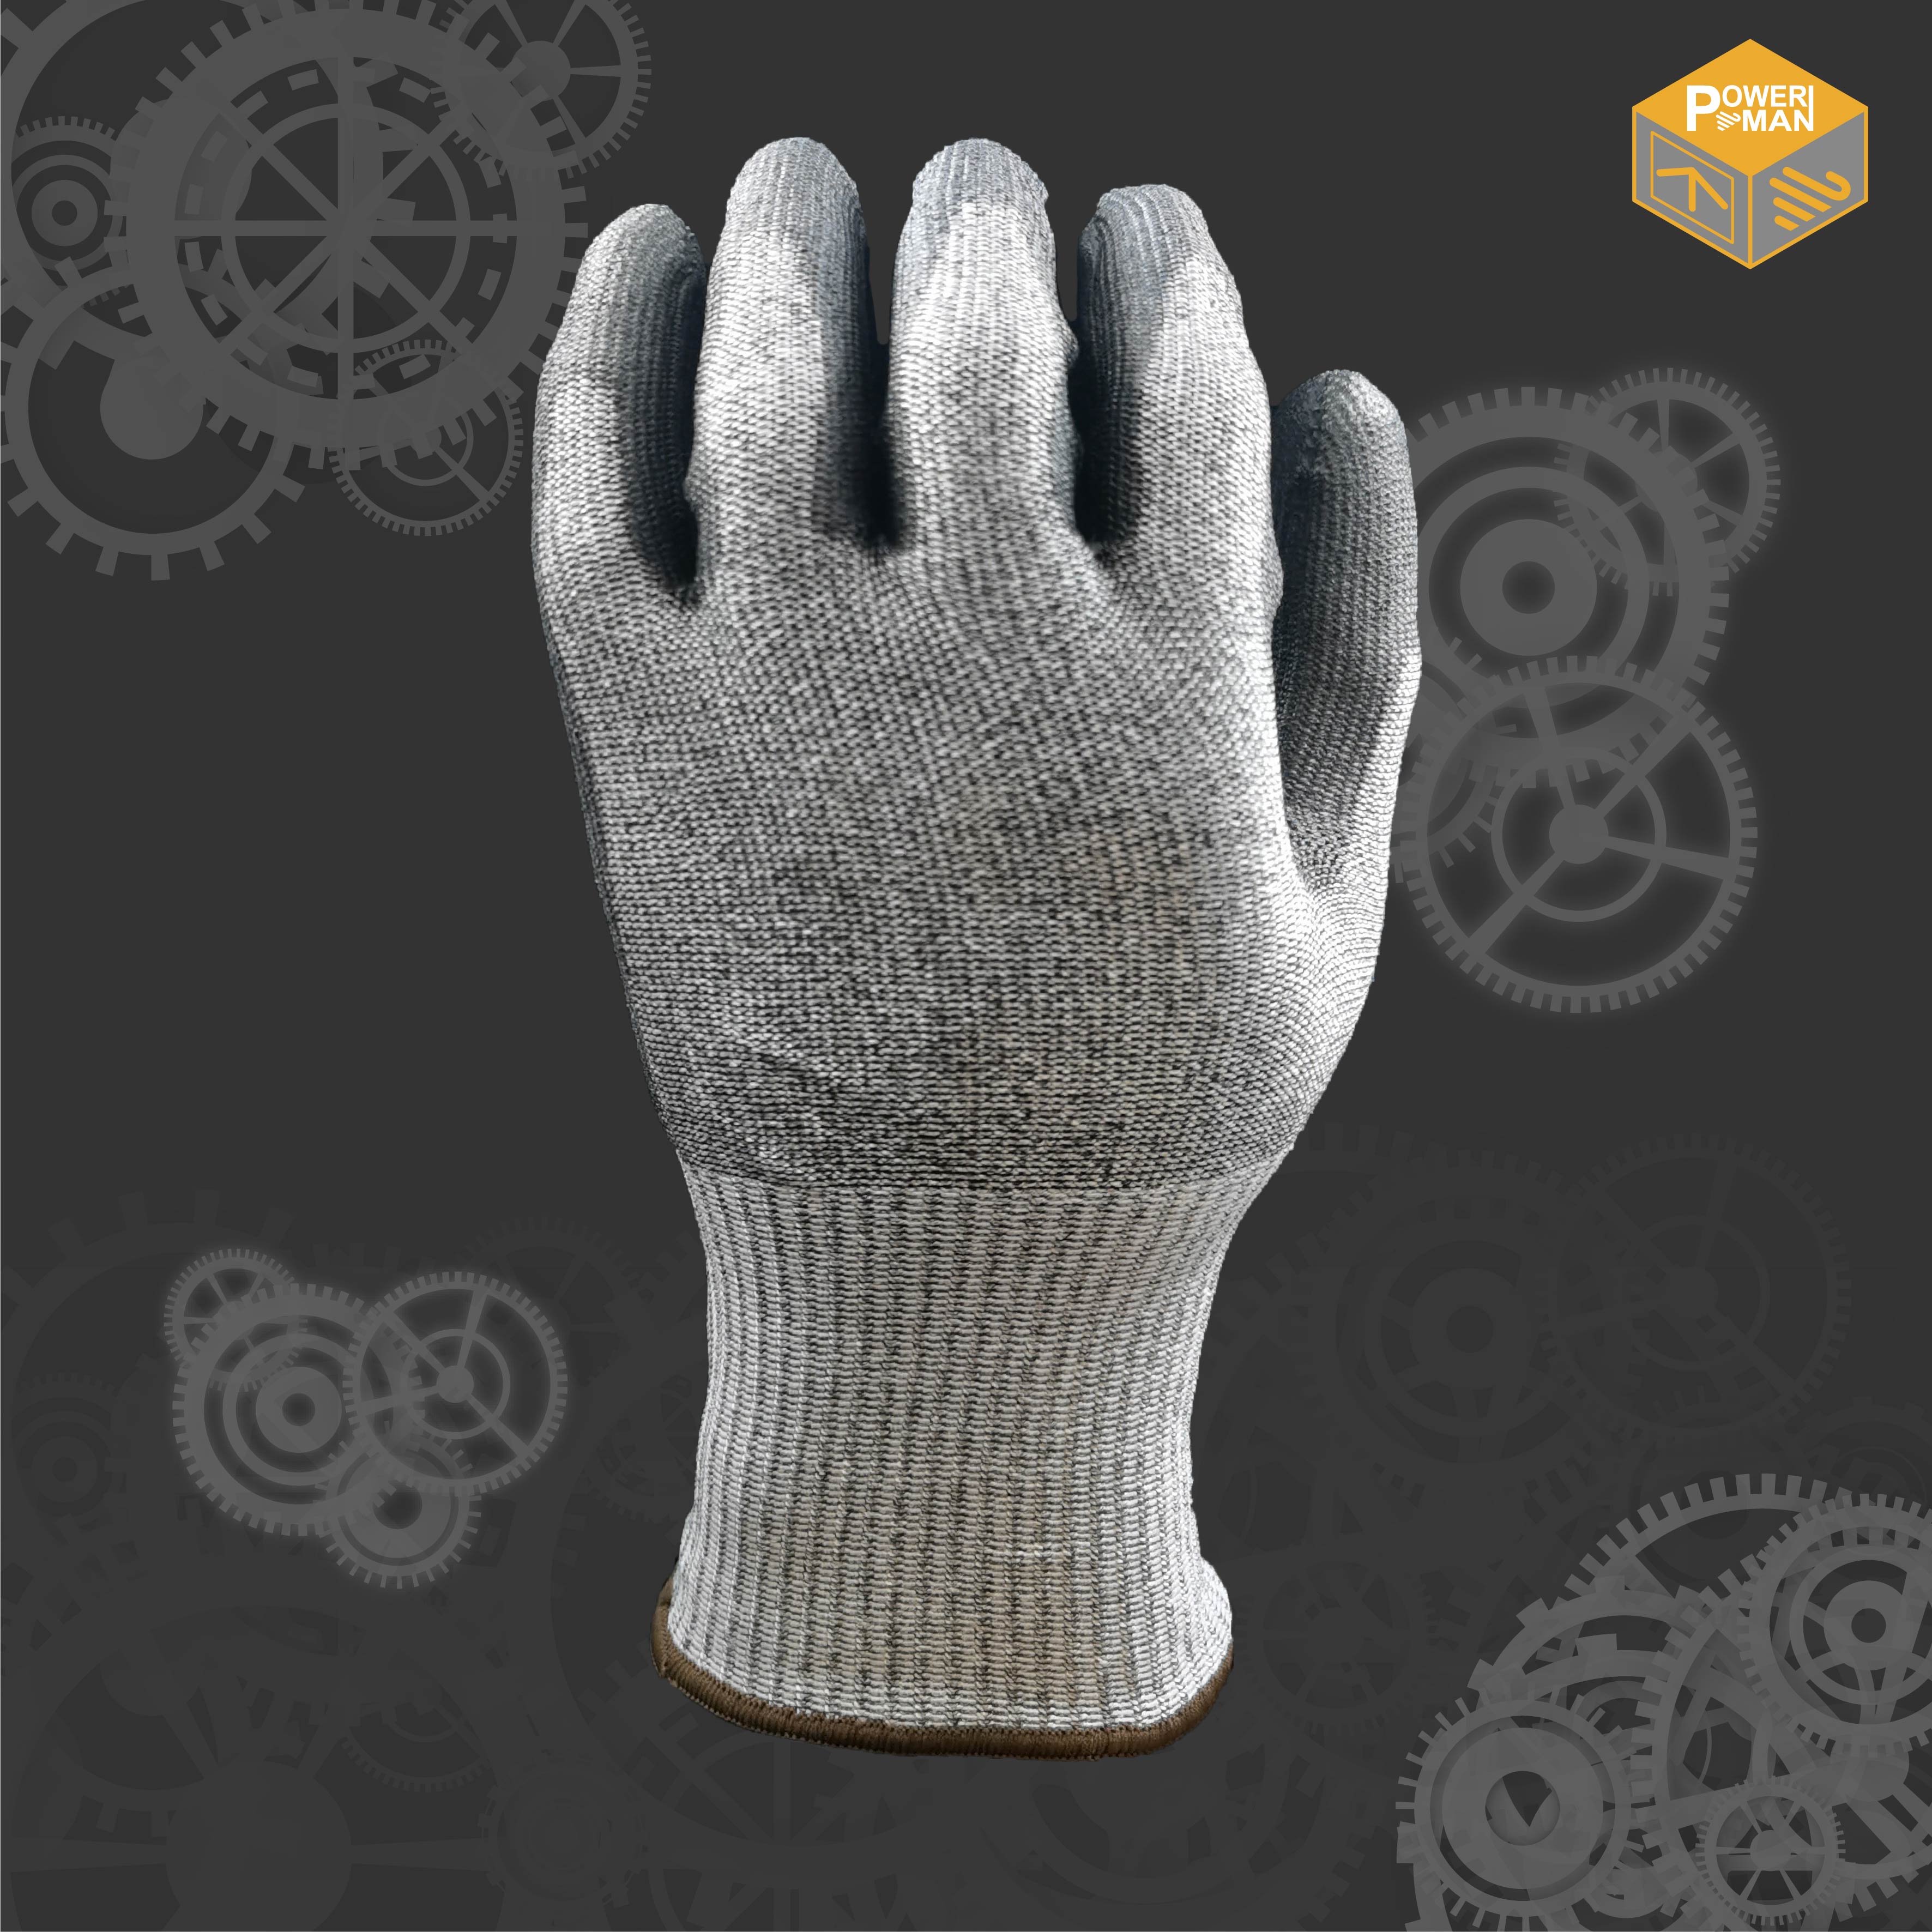 Powerman® 13 Gague Popular PU palm coated HPPE glove (ANSI/ISEA Cut: A5) Featured Image